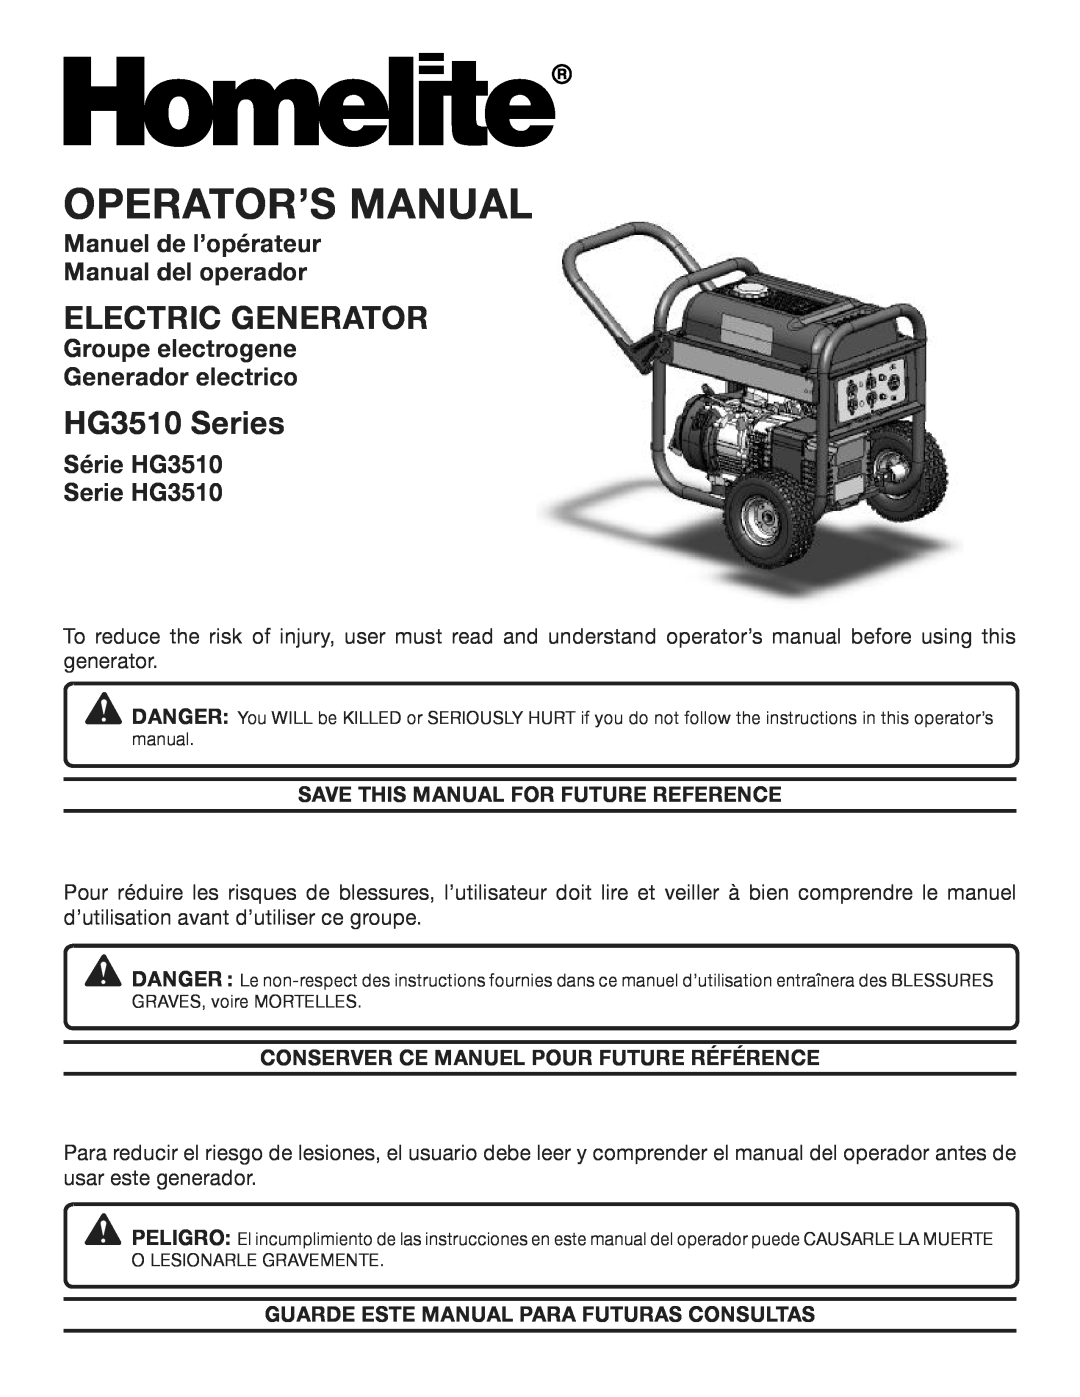 Homelite manuel dutilisation Electric Generator, HG3510 Series, Manuel de l’opérateur Manual del operador 